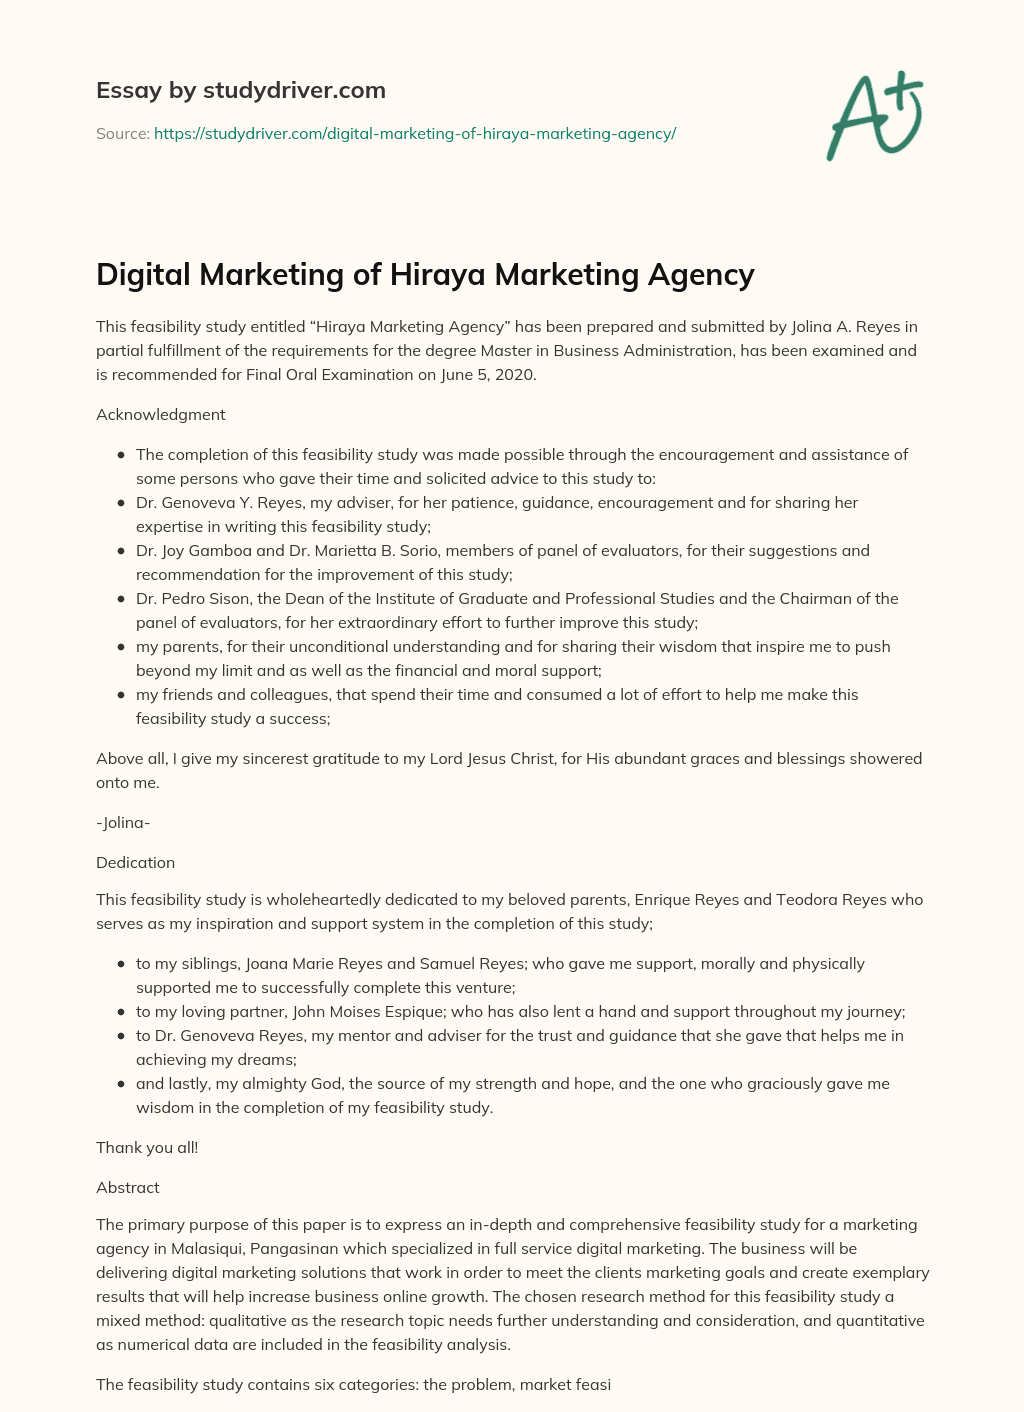 Digital Marketing of Hiraya Marketing Agency essay